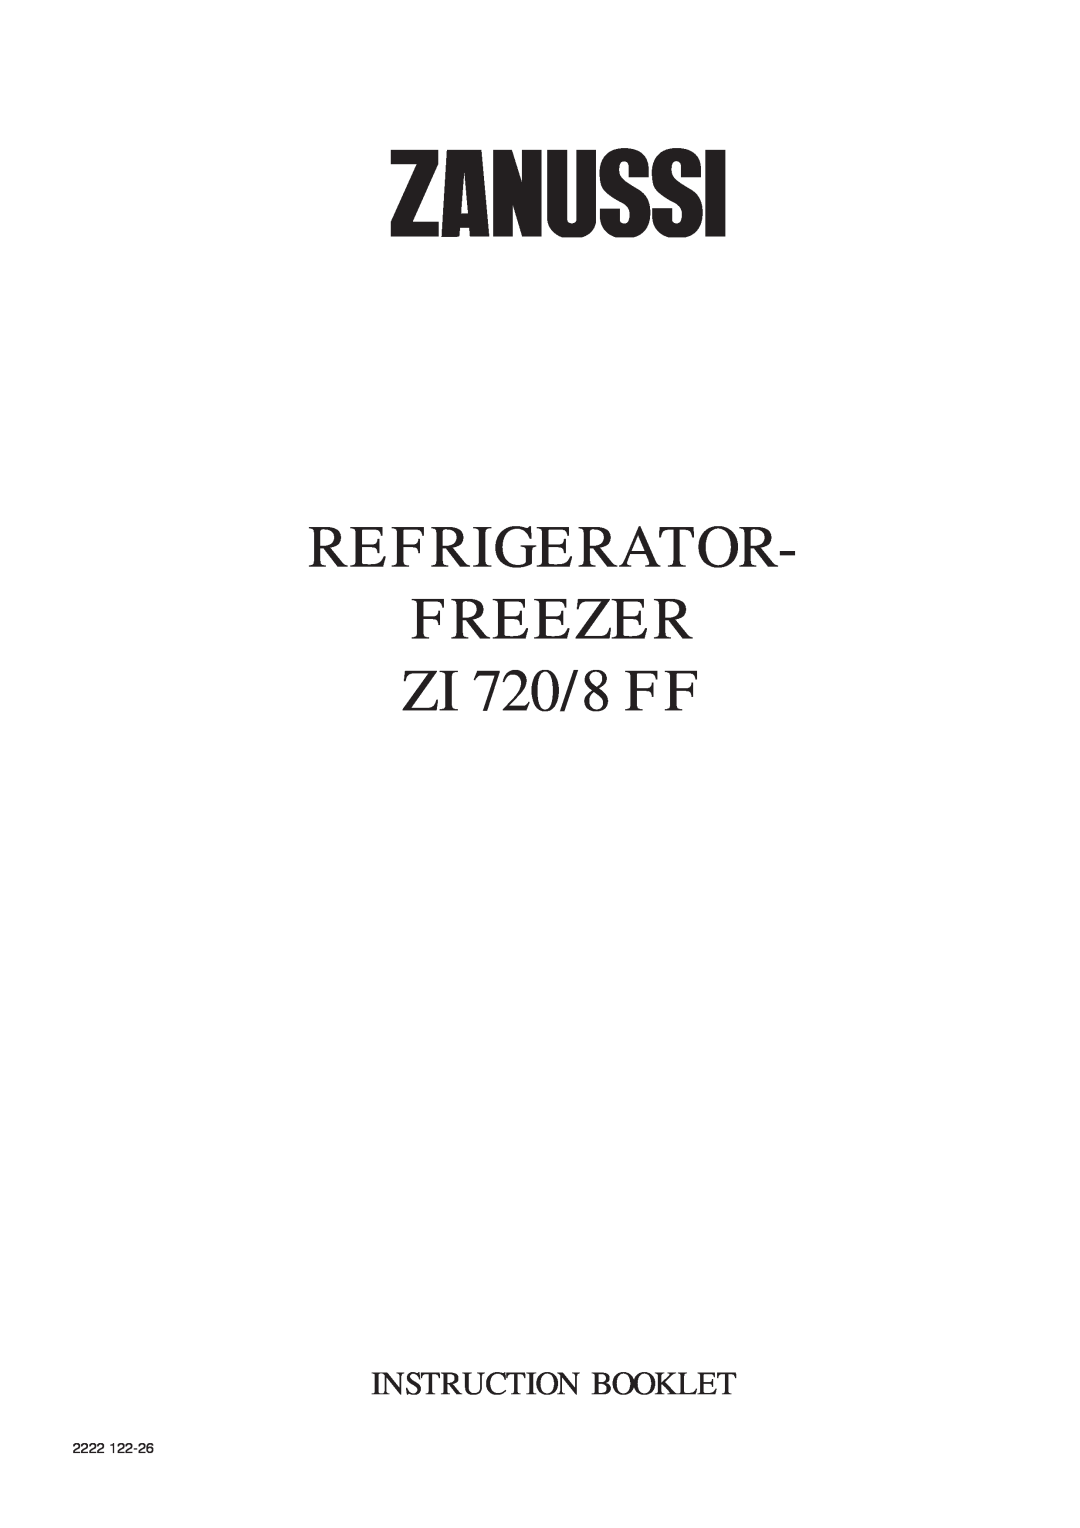 Zanussi manual REFRIGERATOR FREEZER ZI 720/8 FF, Instruction Booklet, 2222 